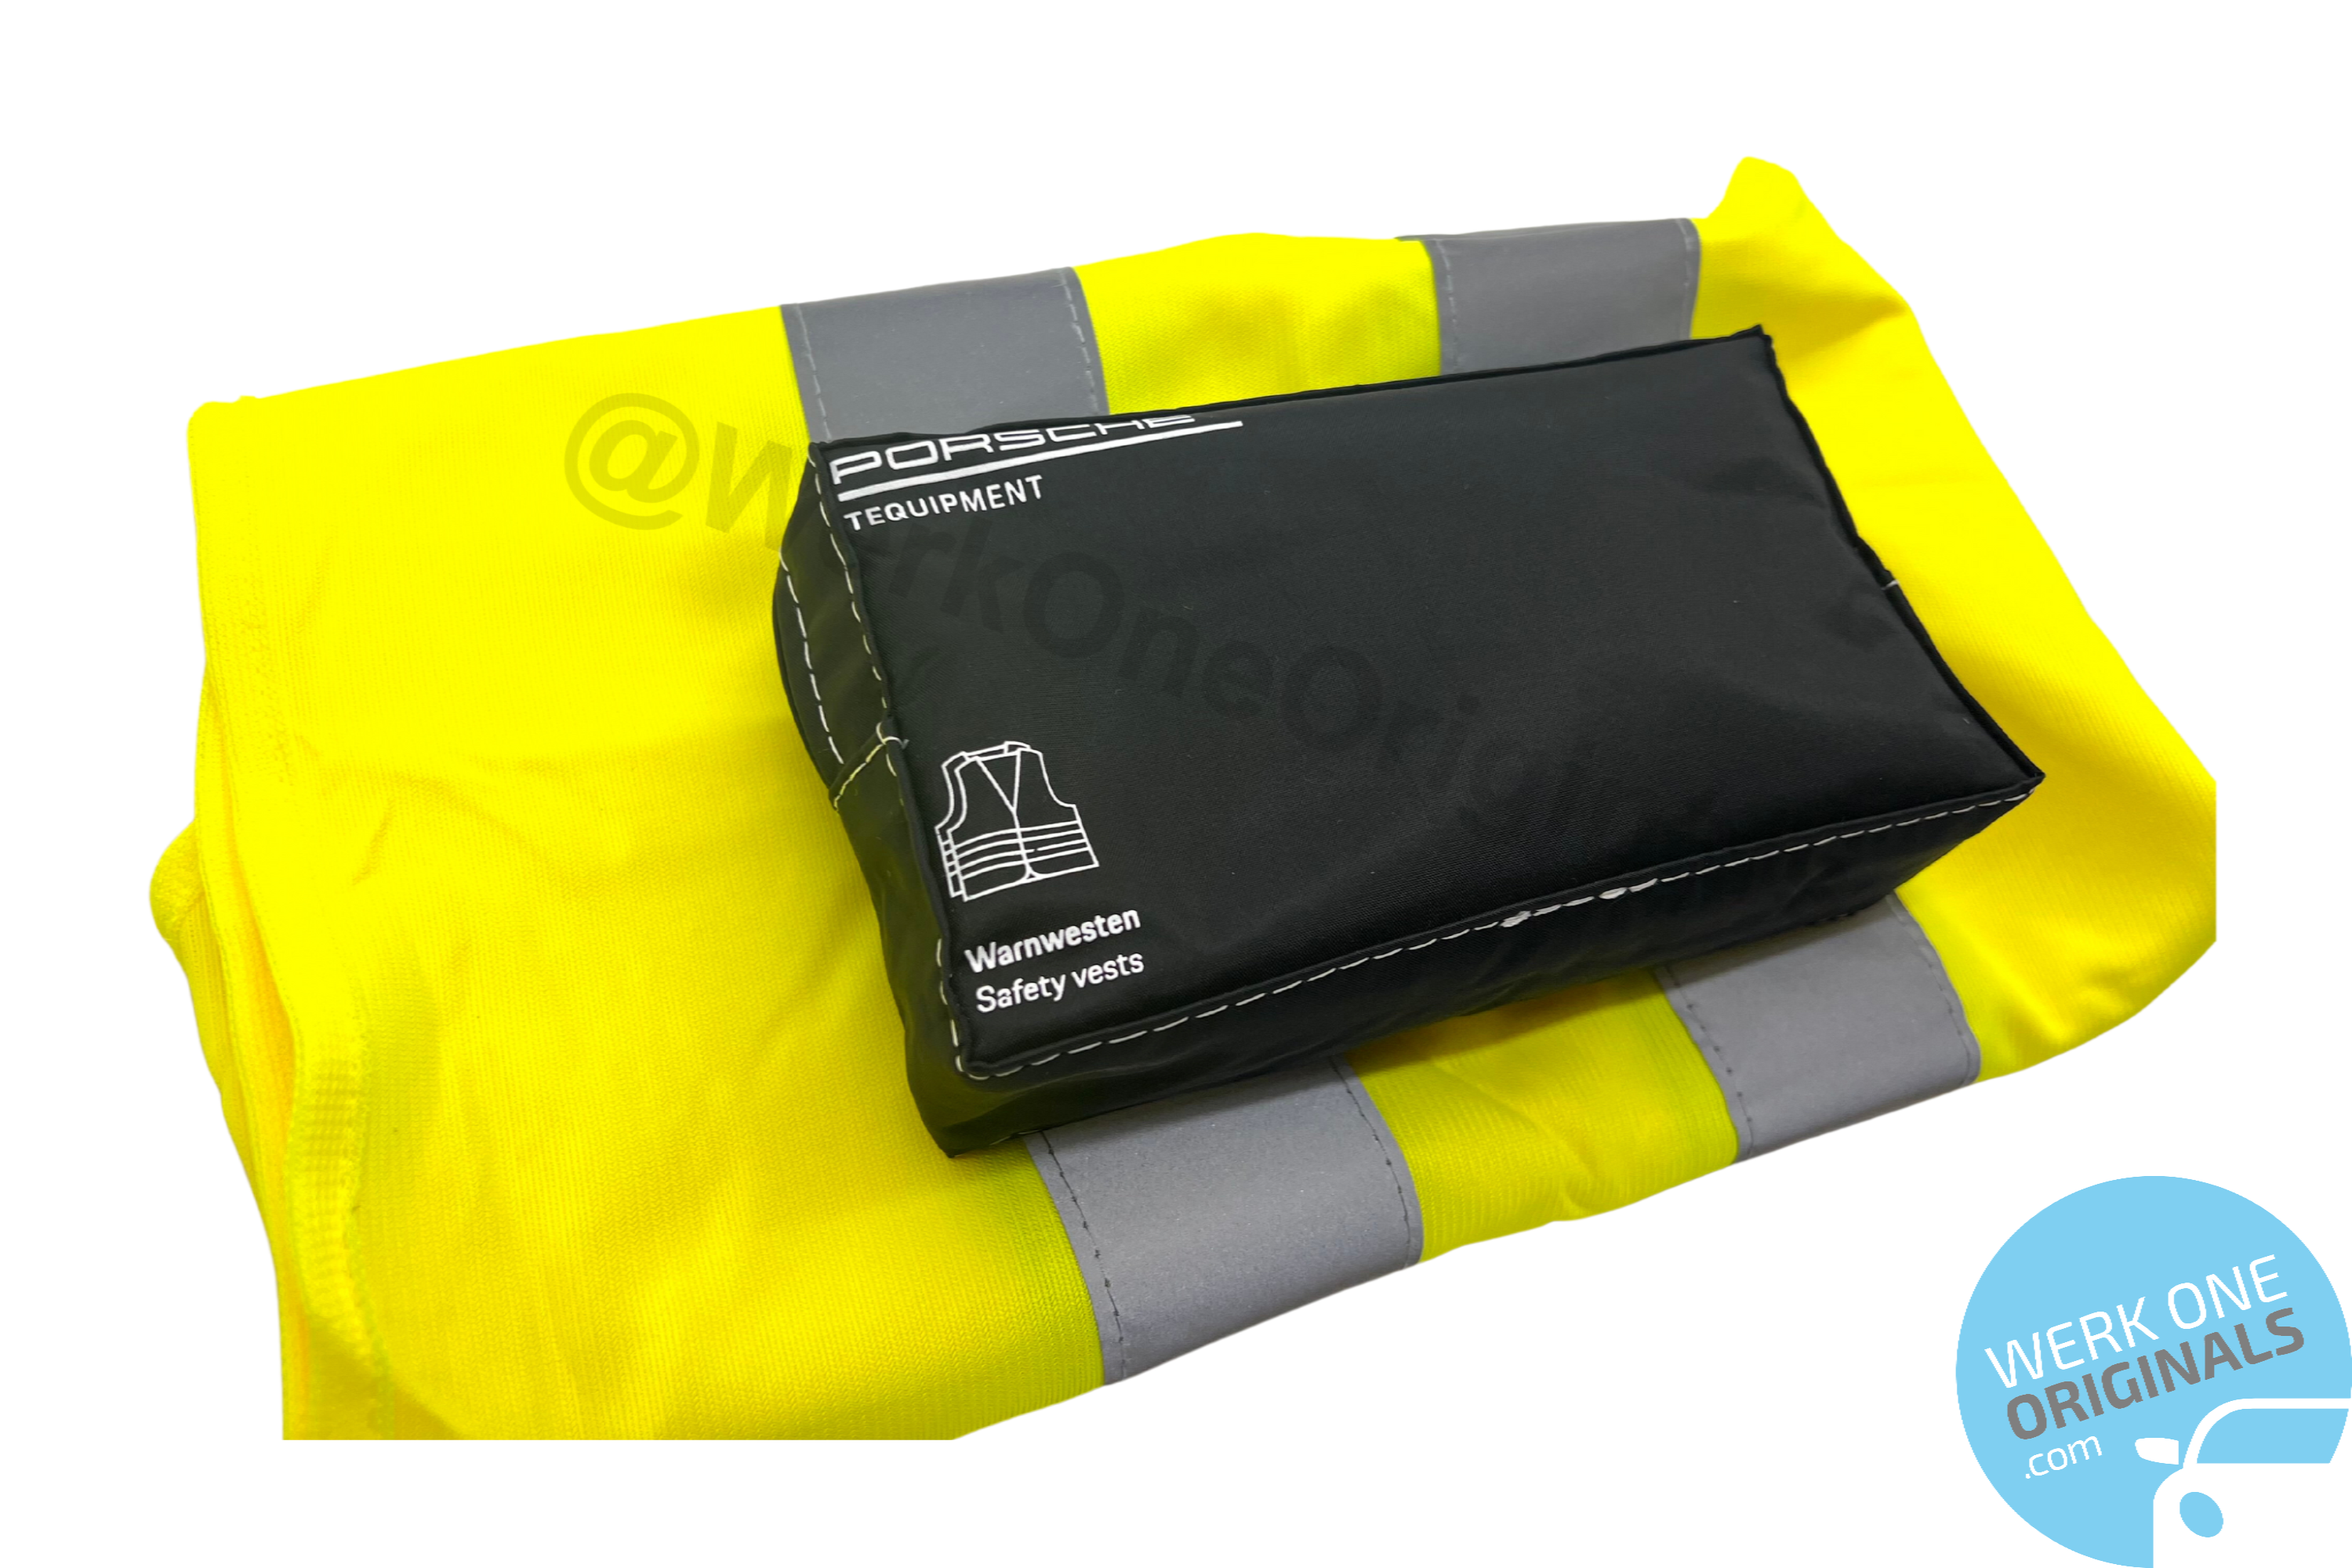 Porsche Tequipment High Visibility Safety Vests - Set of 2